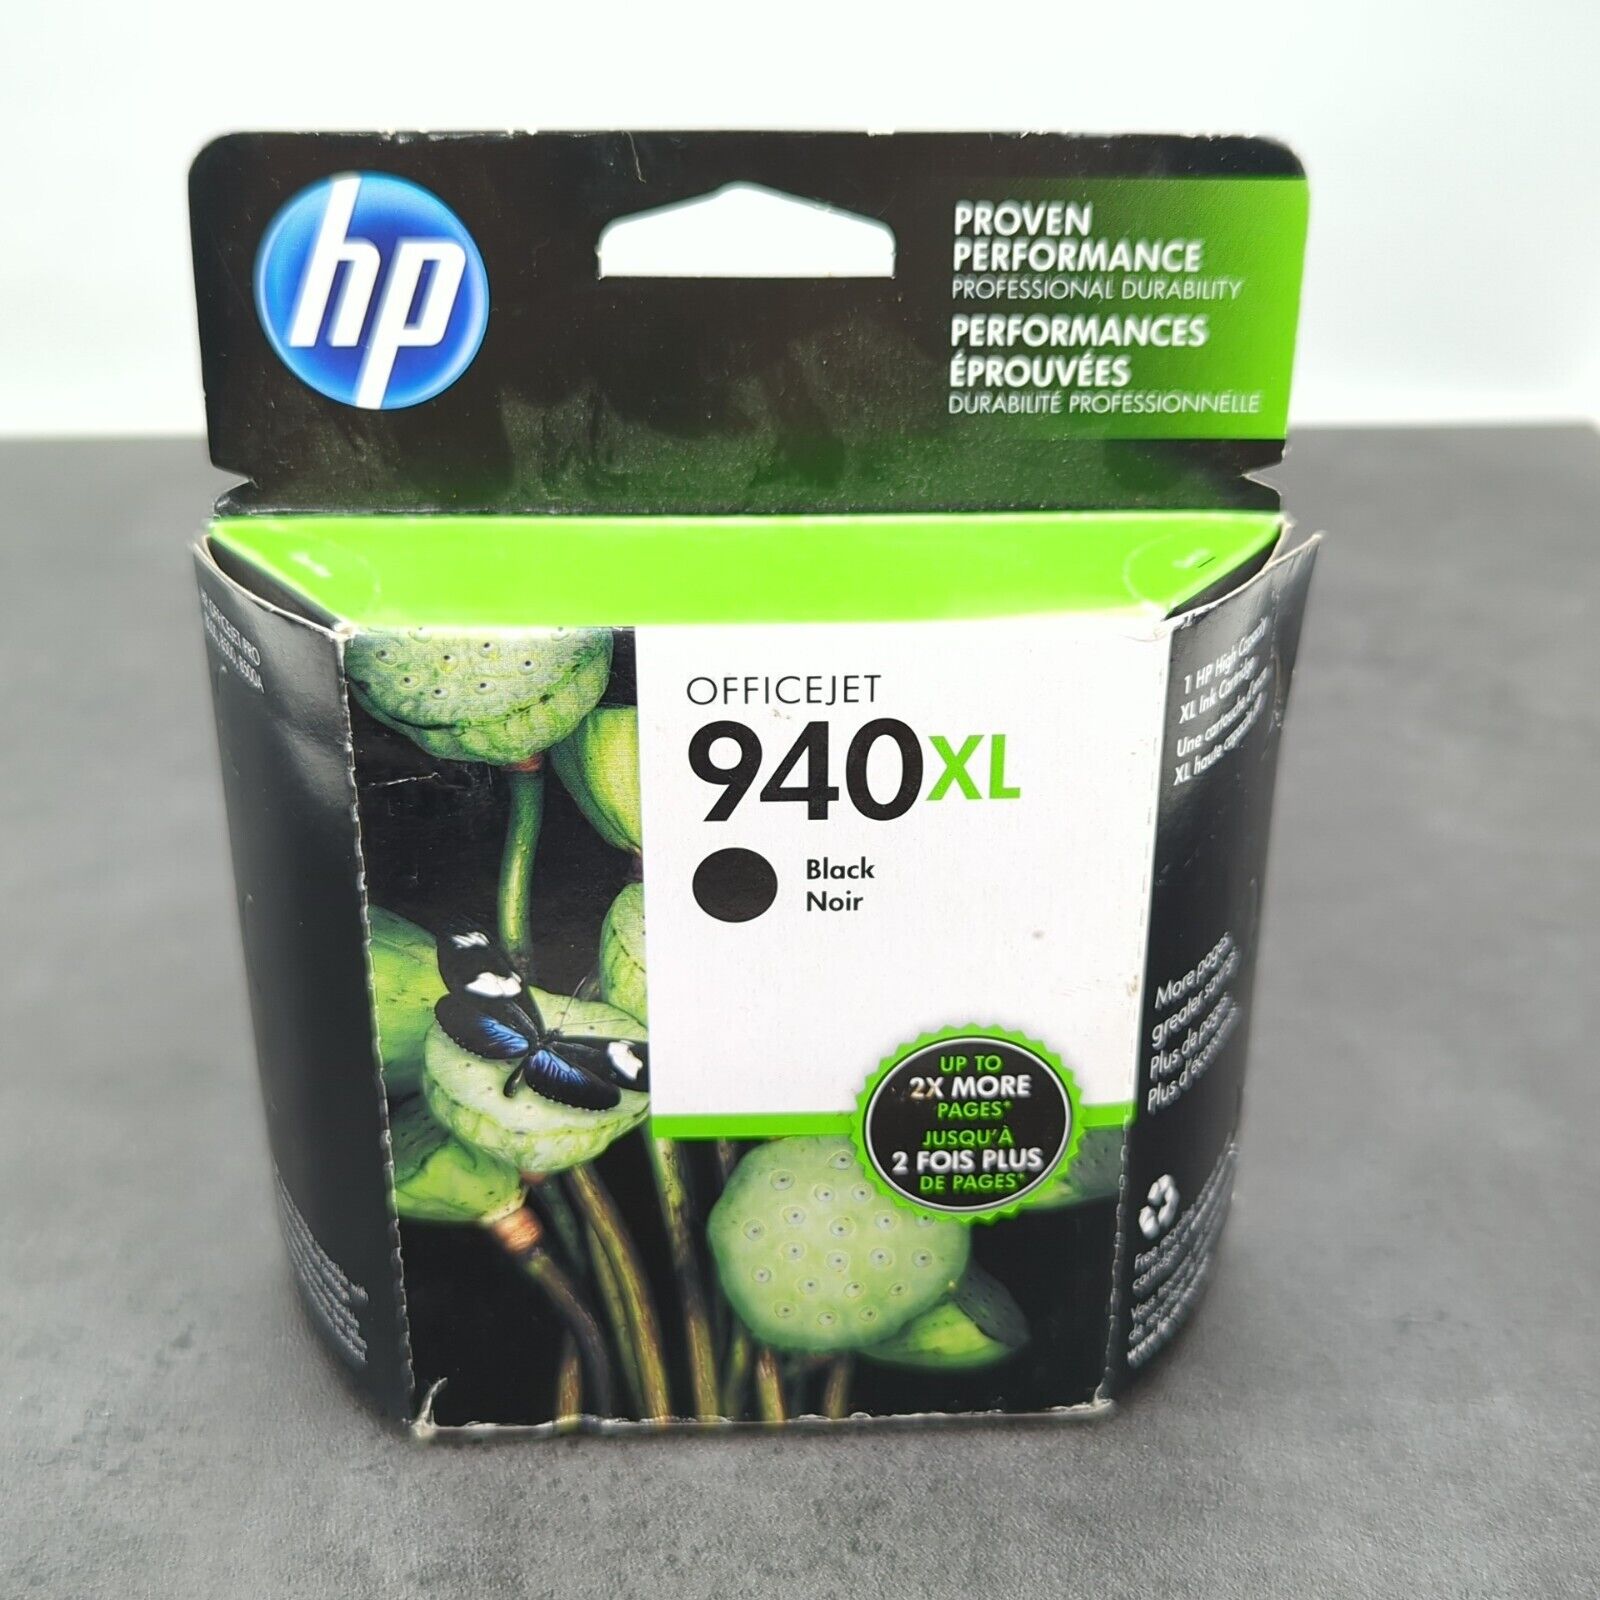 Genuine HP Office Jet 940 XL High Yield Black Ink Cartridge exp 11/17 NEW SEALED